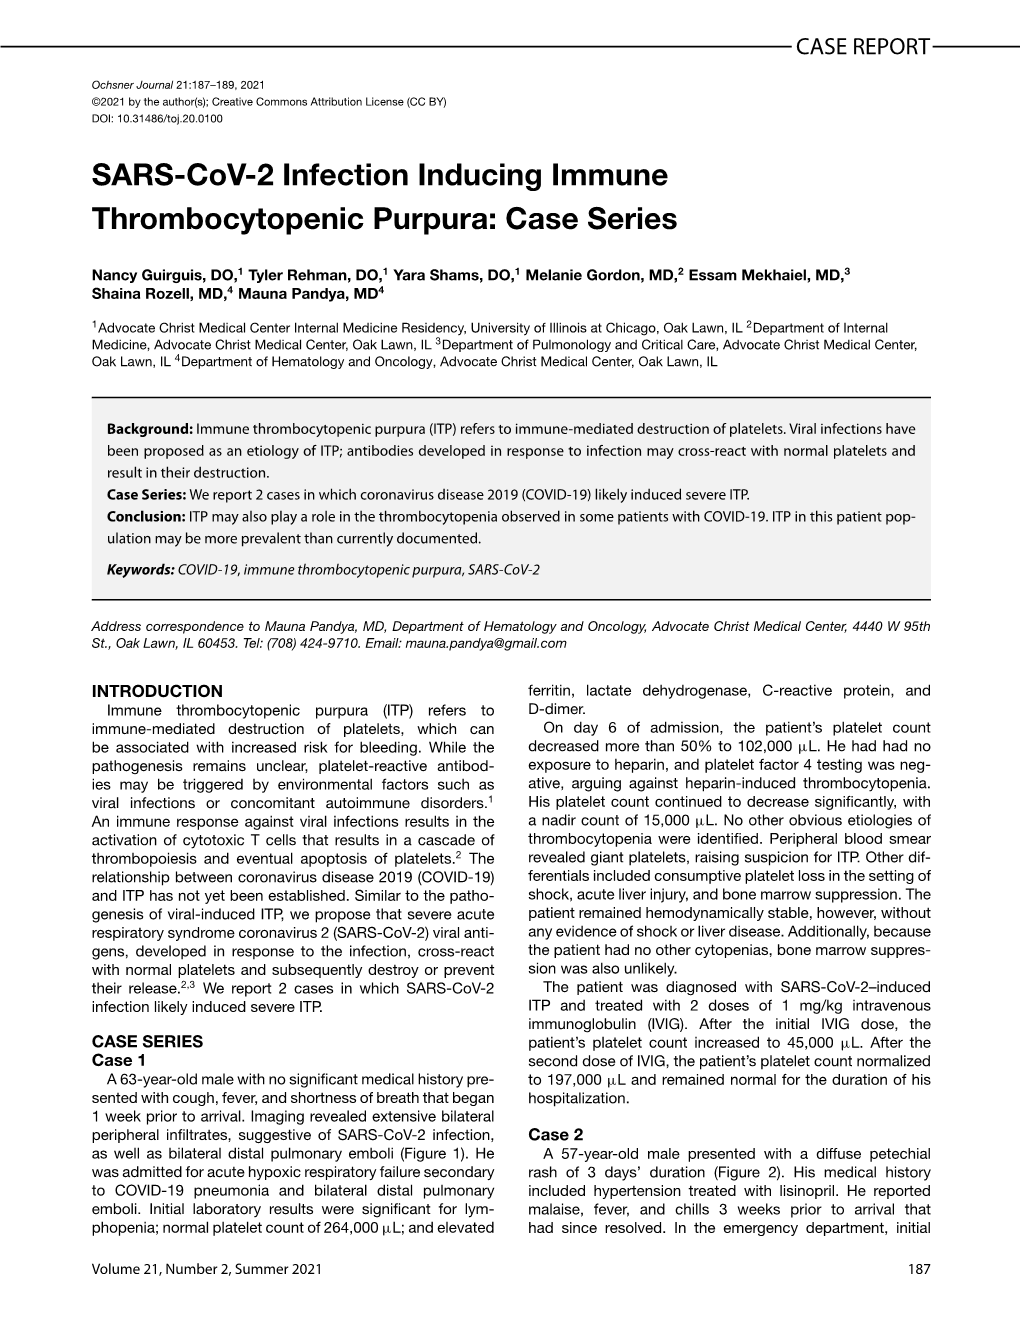 SARS-Cov-2 Infection Inducing Immune Thrombocytopenic Purpura: Case Series